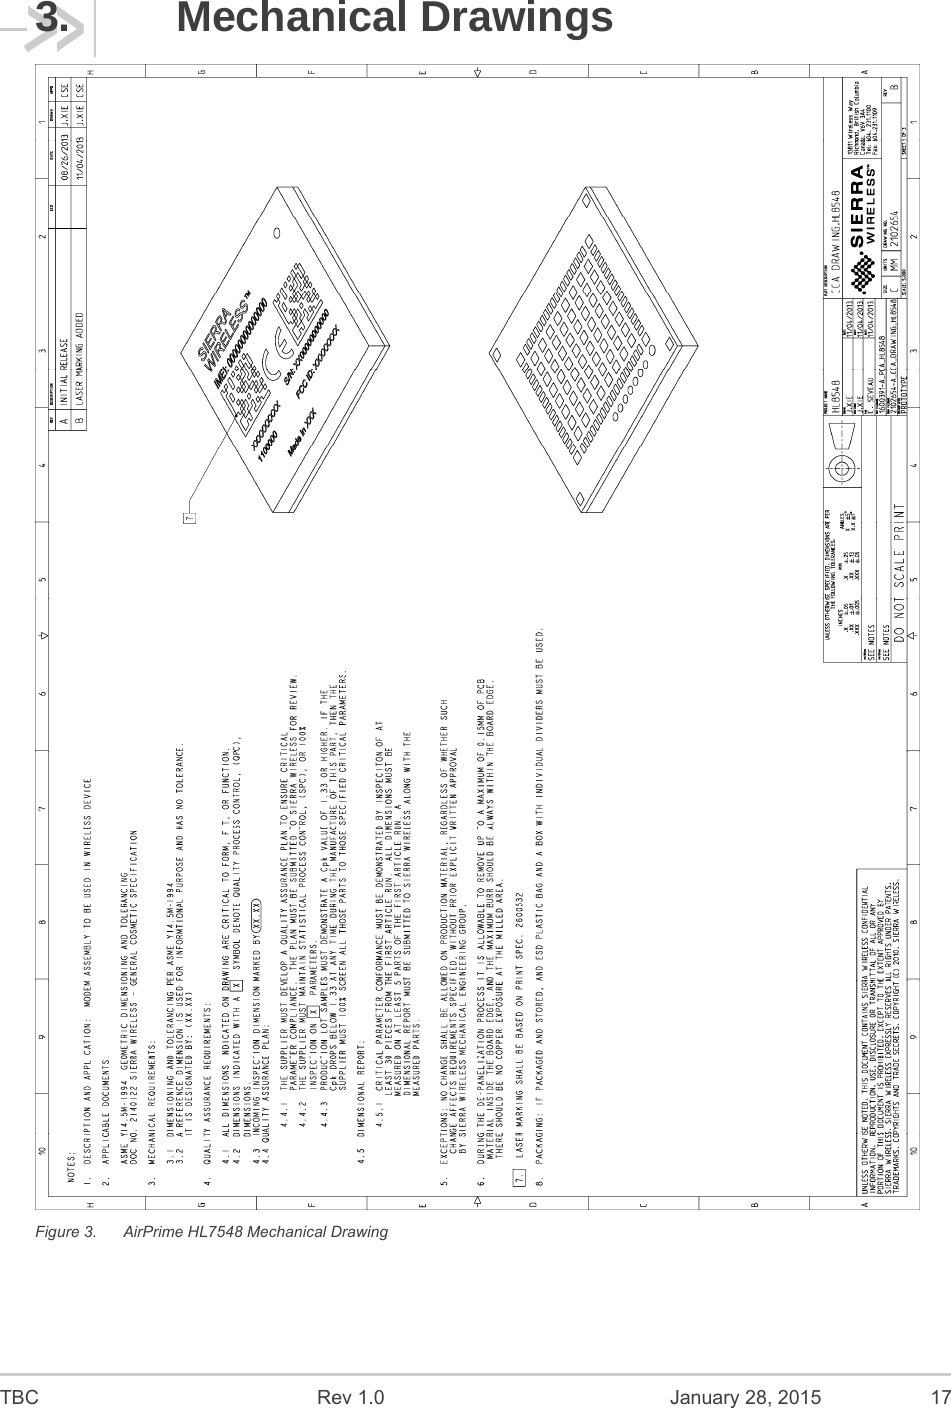  TBC  Rev 1.0  January 28, 2015  17 3. Mechanical Drawings  Figure 3.  AirPrime HL7548 Mechanical Drawing 